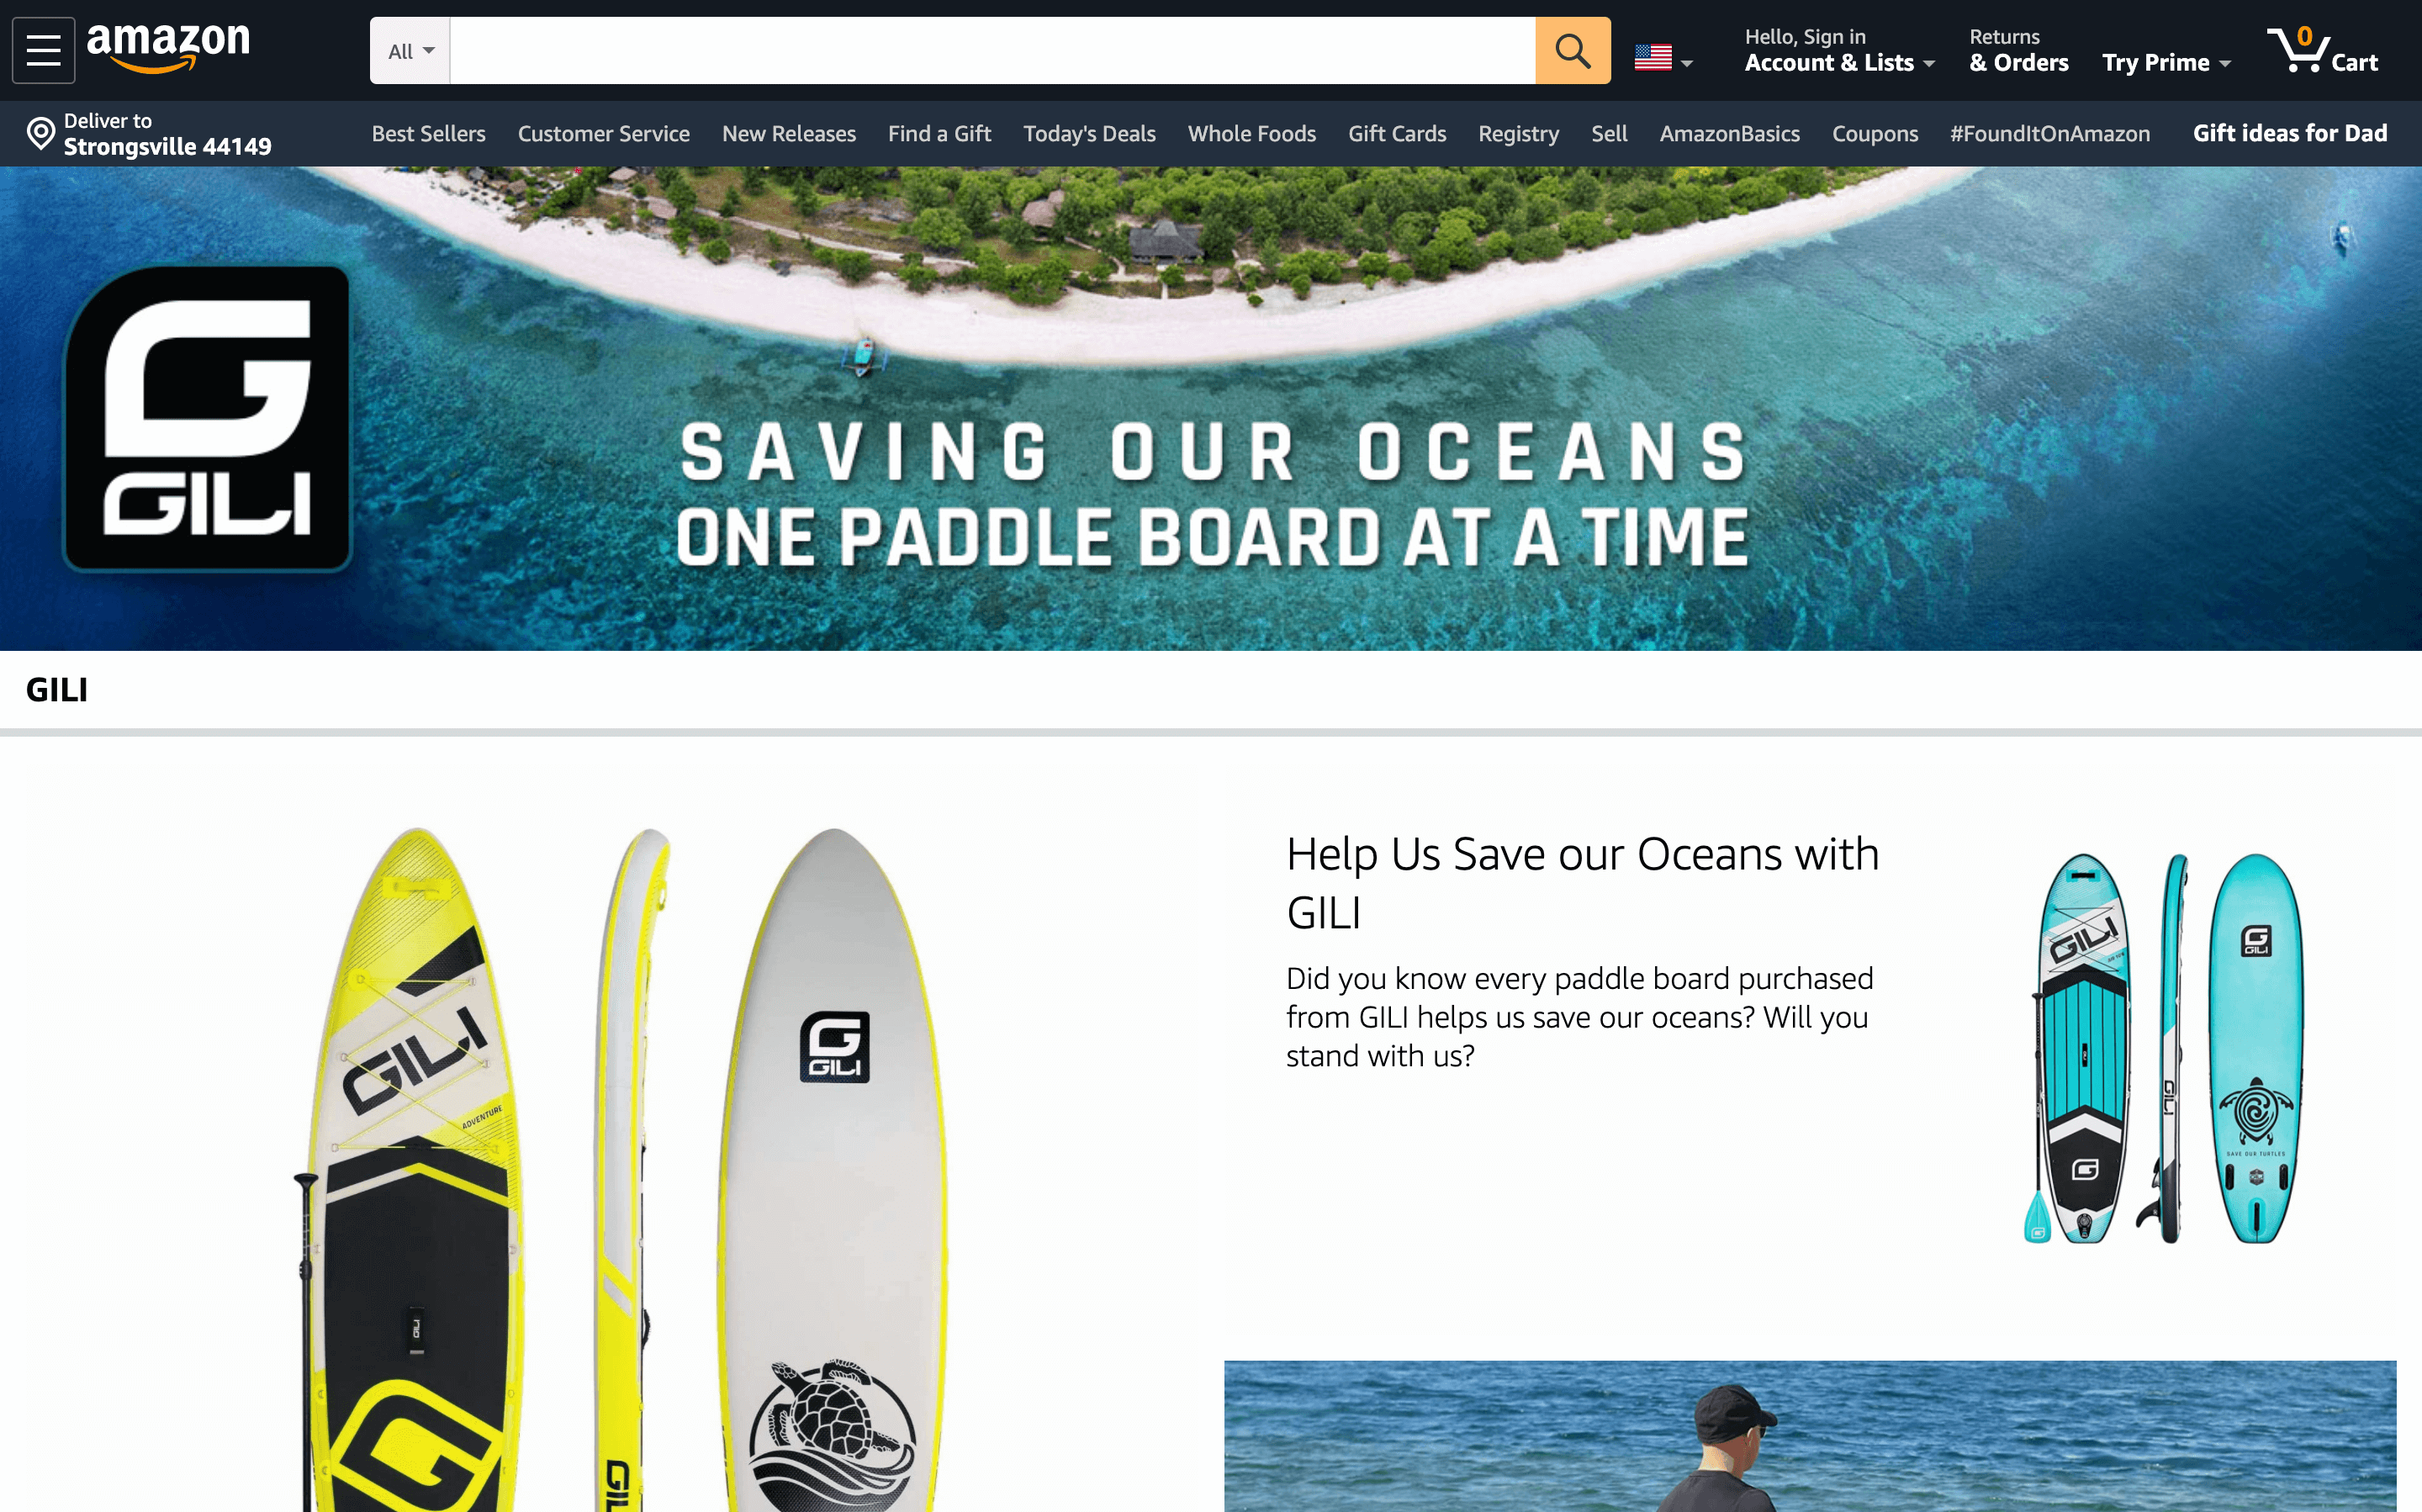 Paddleboard